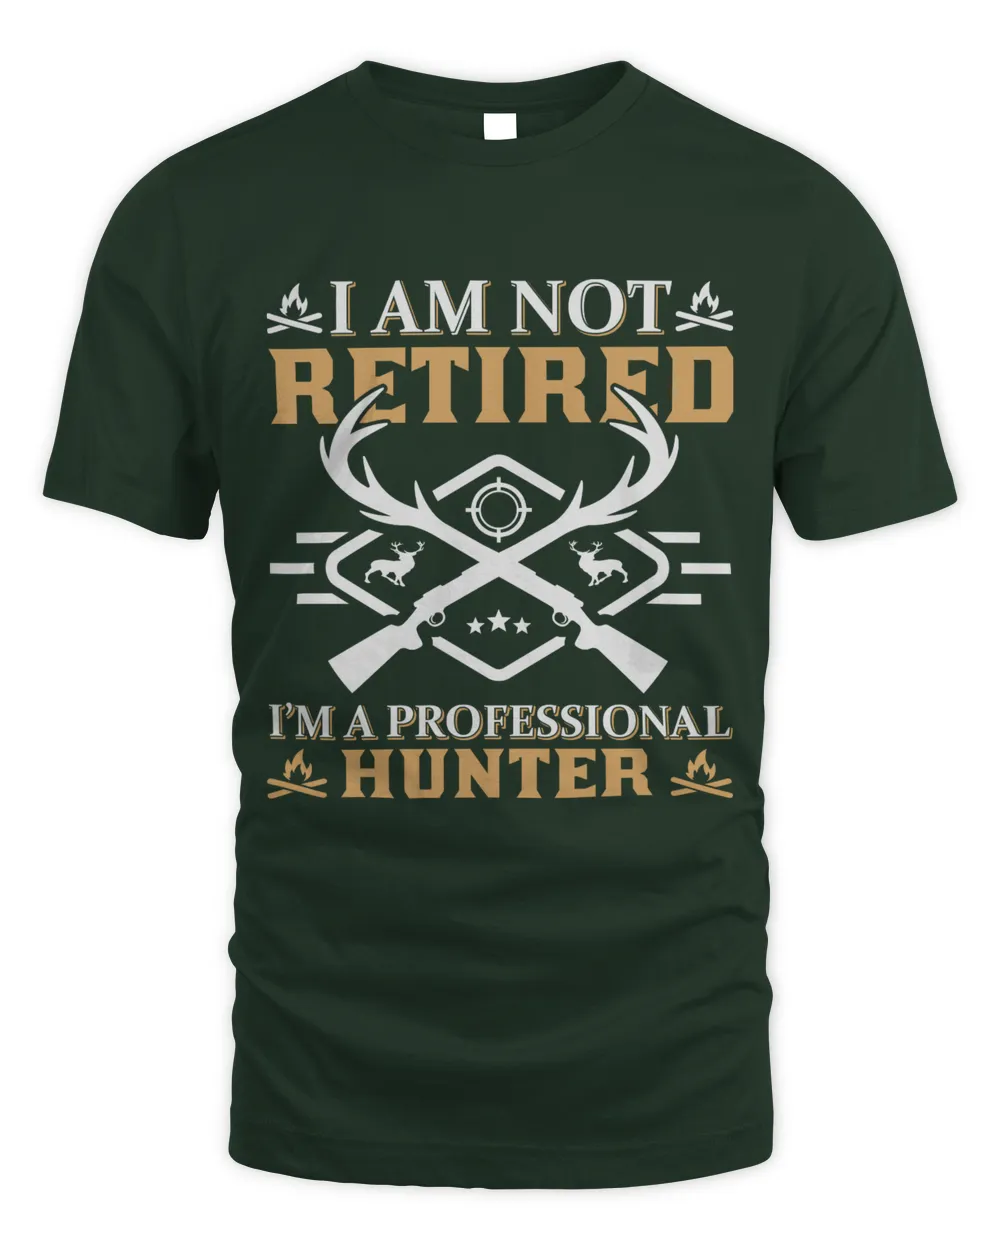 Hunting T-Shirt, Hunting Shirt for Dad, Grandfather (84)